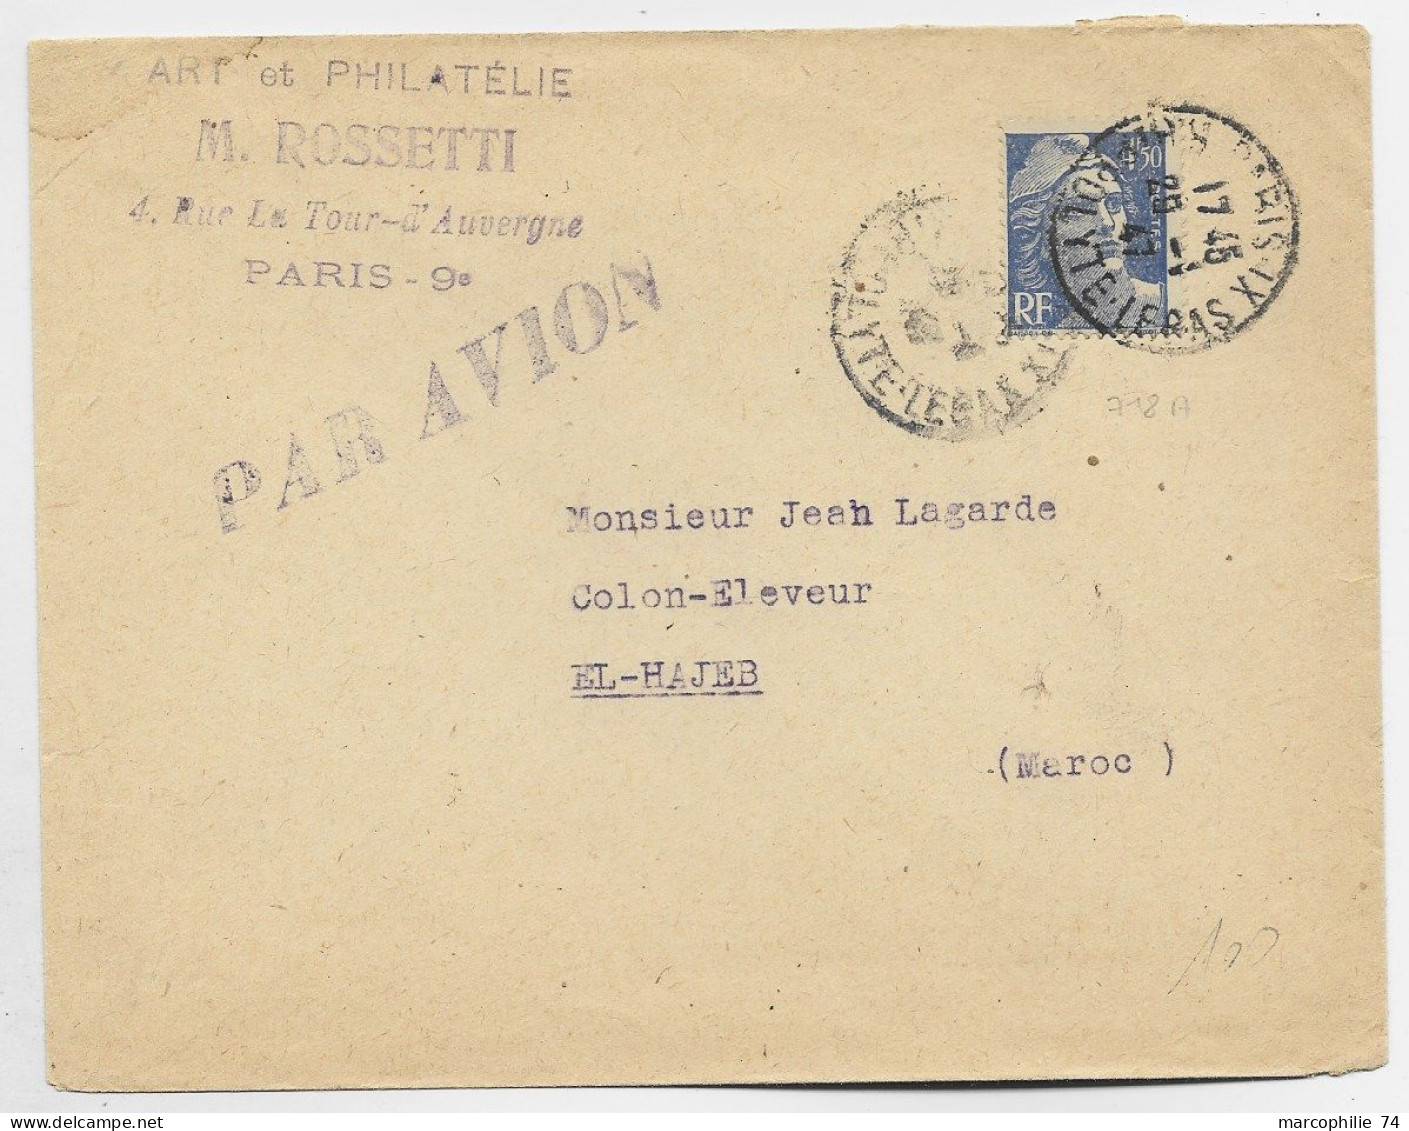 GANDON 4FR50 SEUL LETTRE AVION PARIS IX 1947 POUR LE MAROC AU TARIF - 1945-54 Marianna Di Gandon